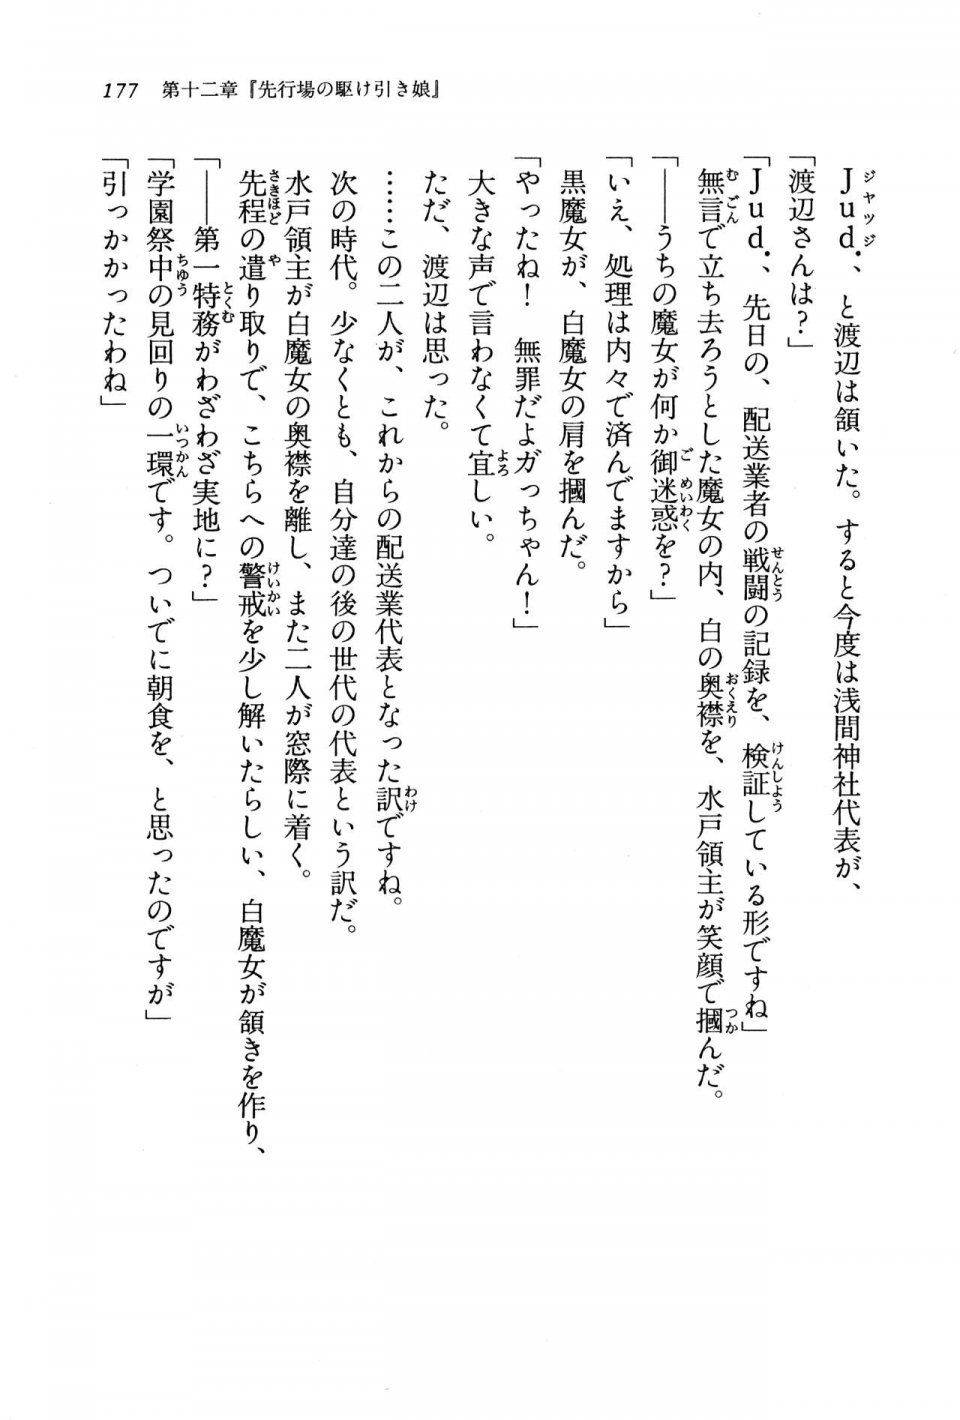 Kyoukai Senjou no Horizon BD Special Mininovel Vol 8(4B) - Photo #181